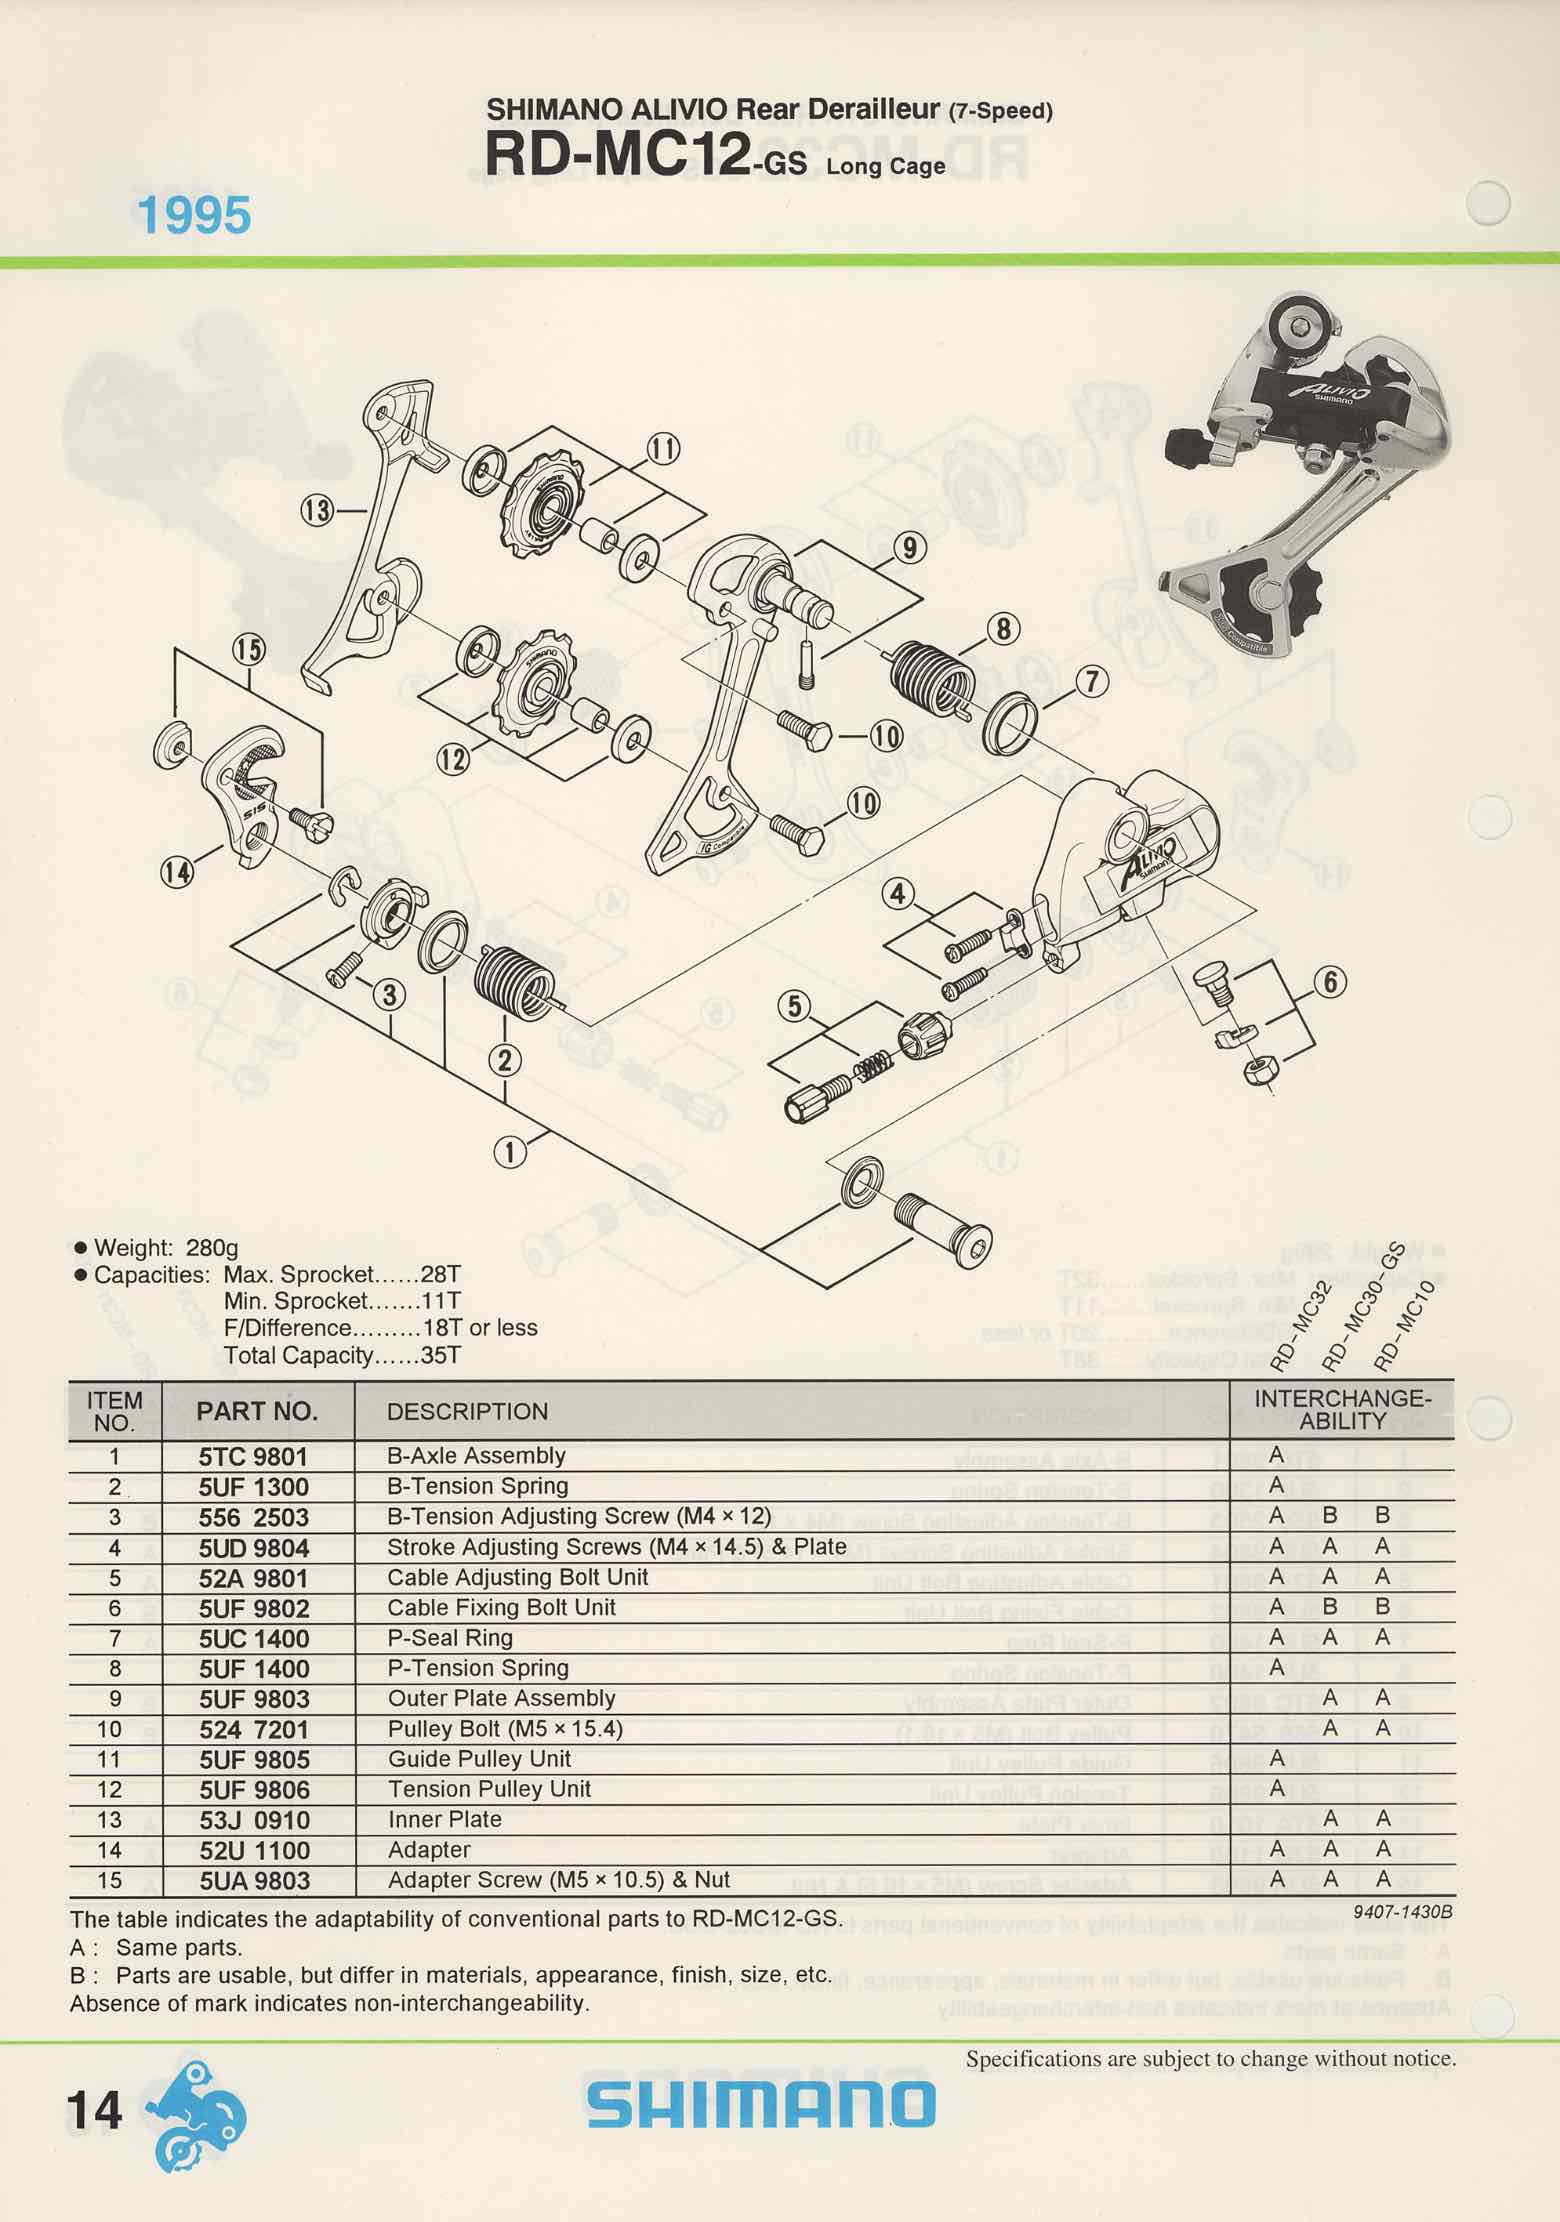 Shimano Spare Parts Catalogue - 1994 to 2004 s5 p14 main image